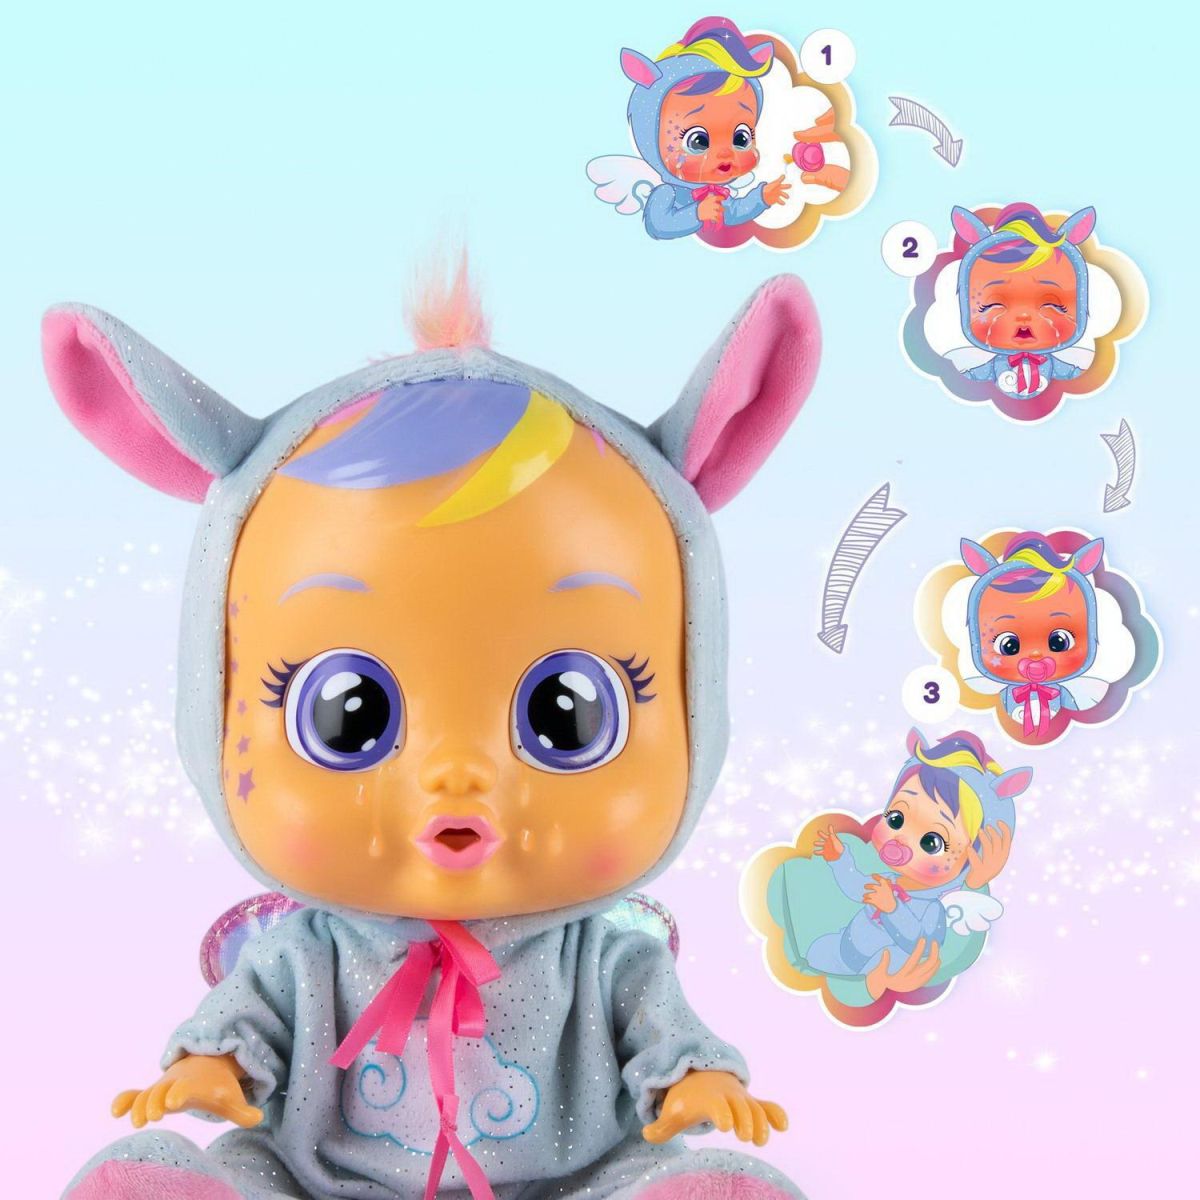 Кукла IMC Toys Cry Babies Плачущий младенец, Серия Fantasy, Jenna, 30 см